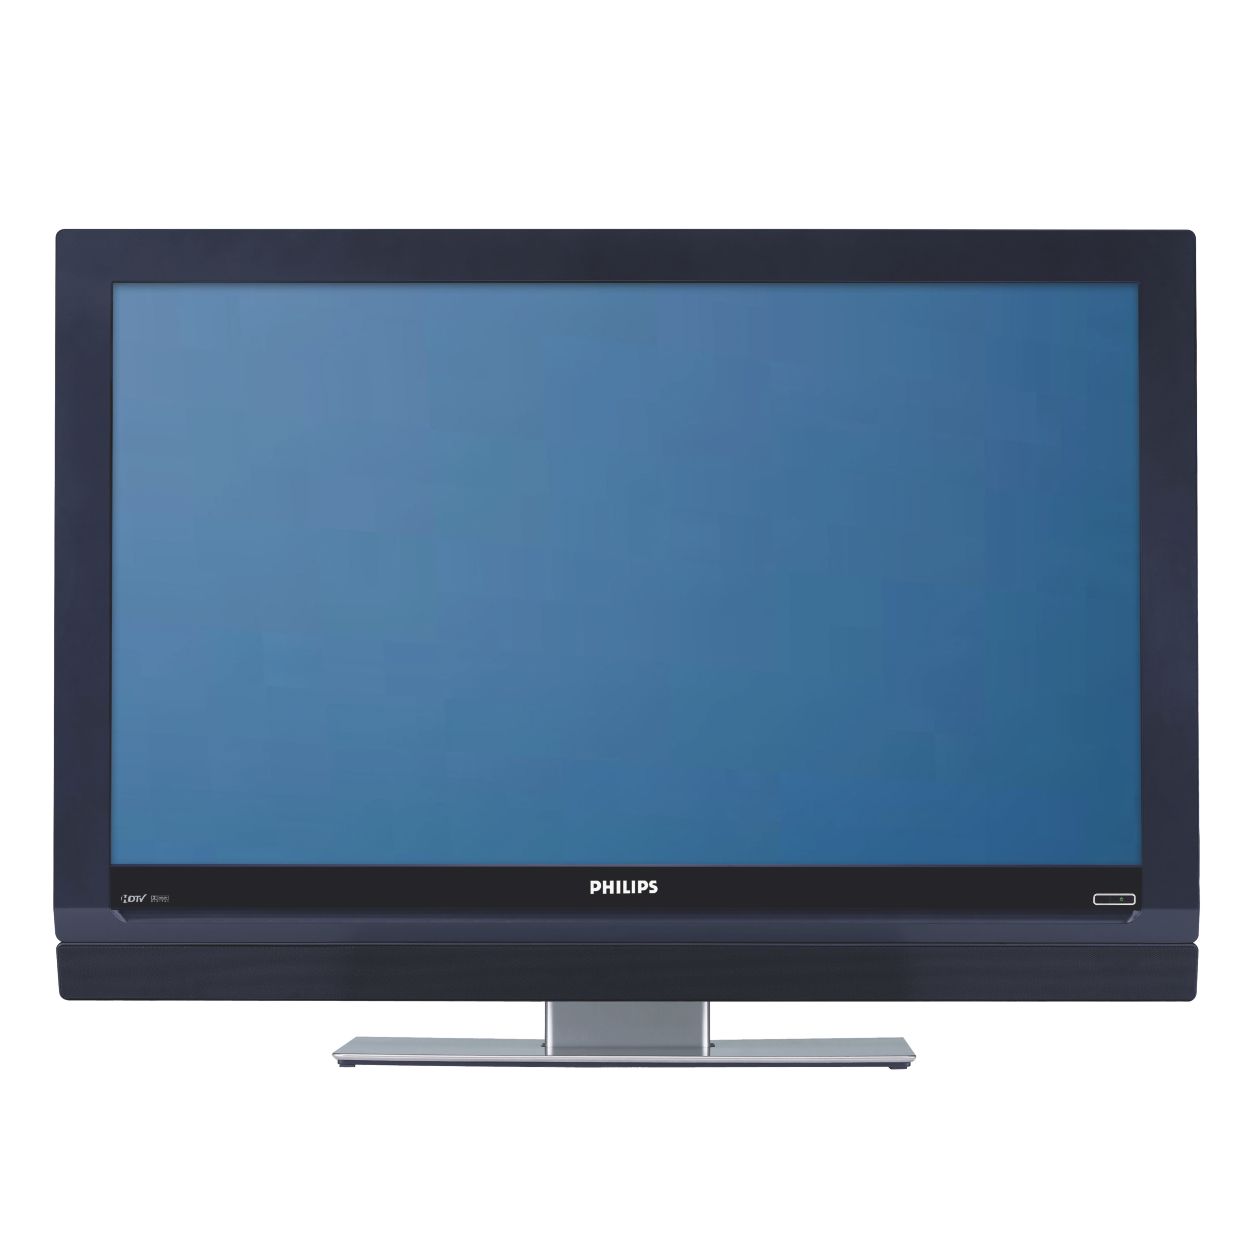 digital widescreen flat TV 37PFL5322D/37 | Philips